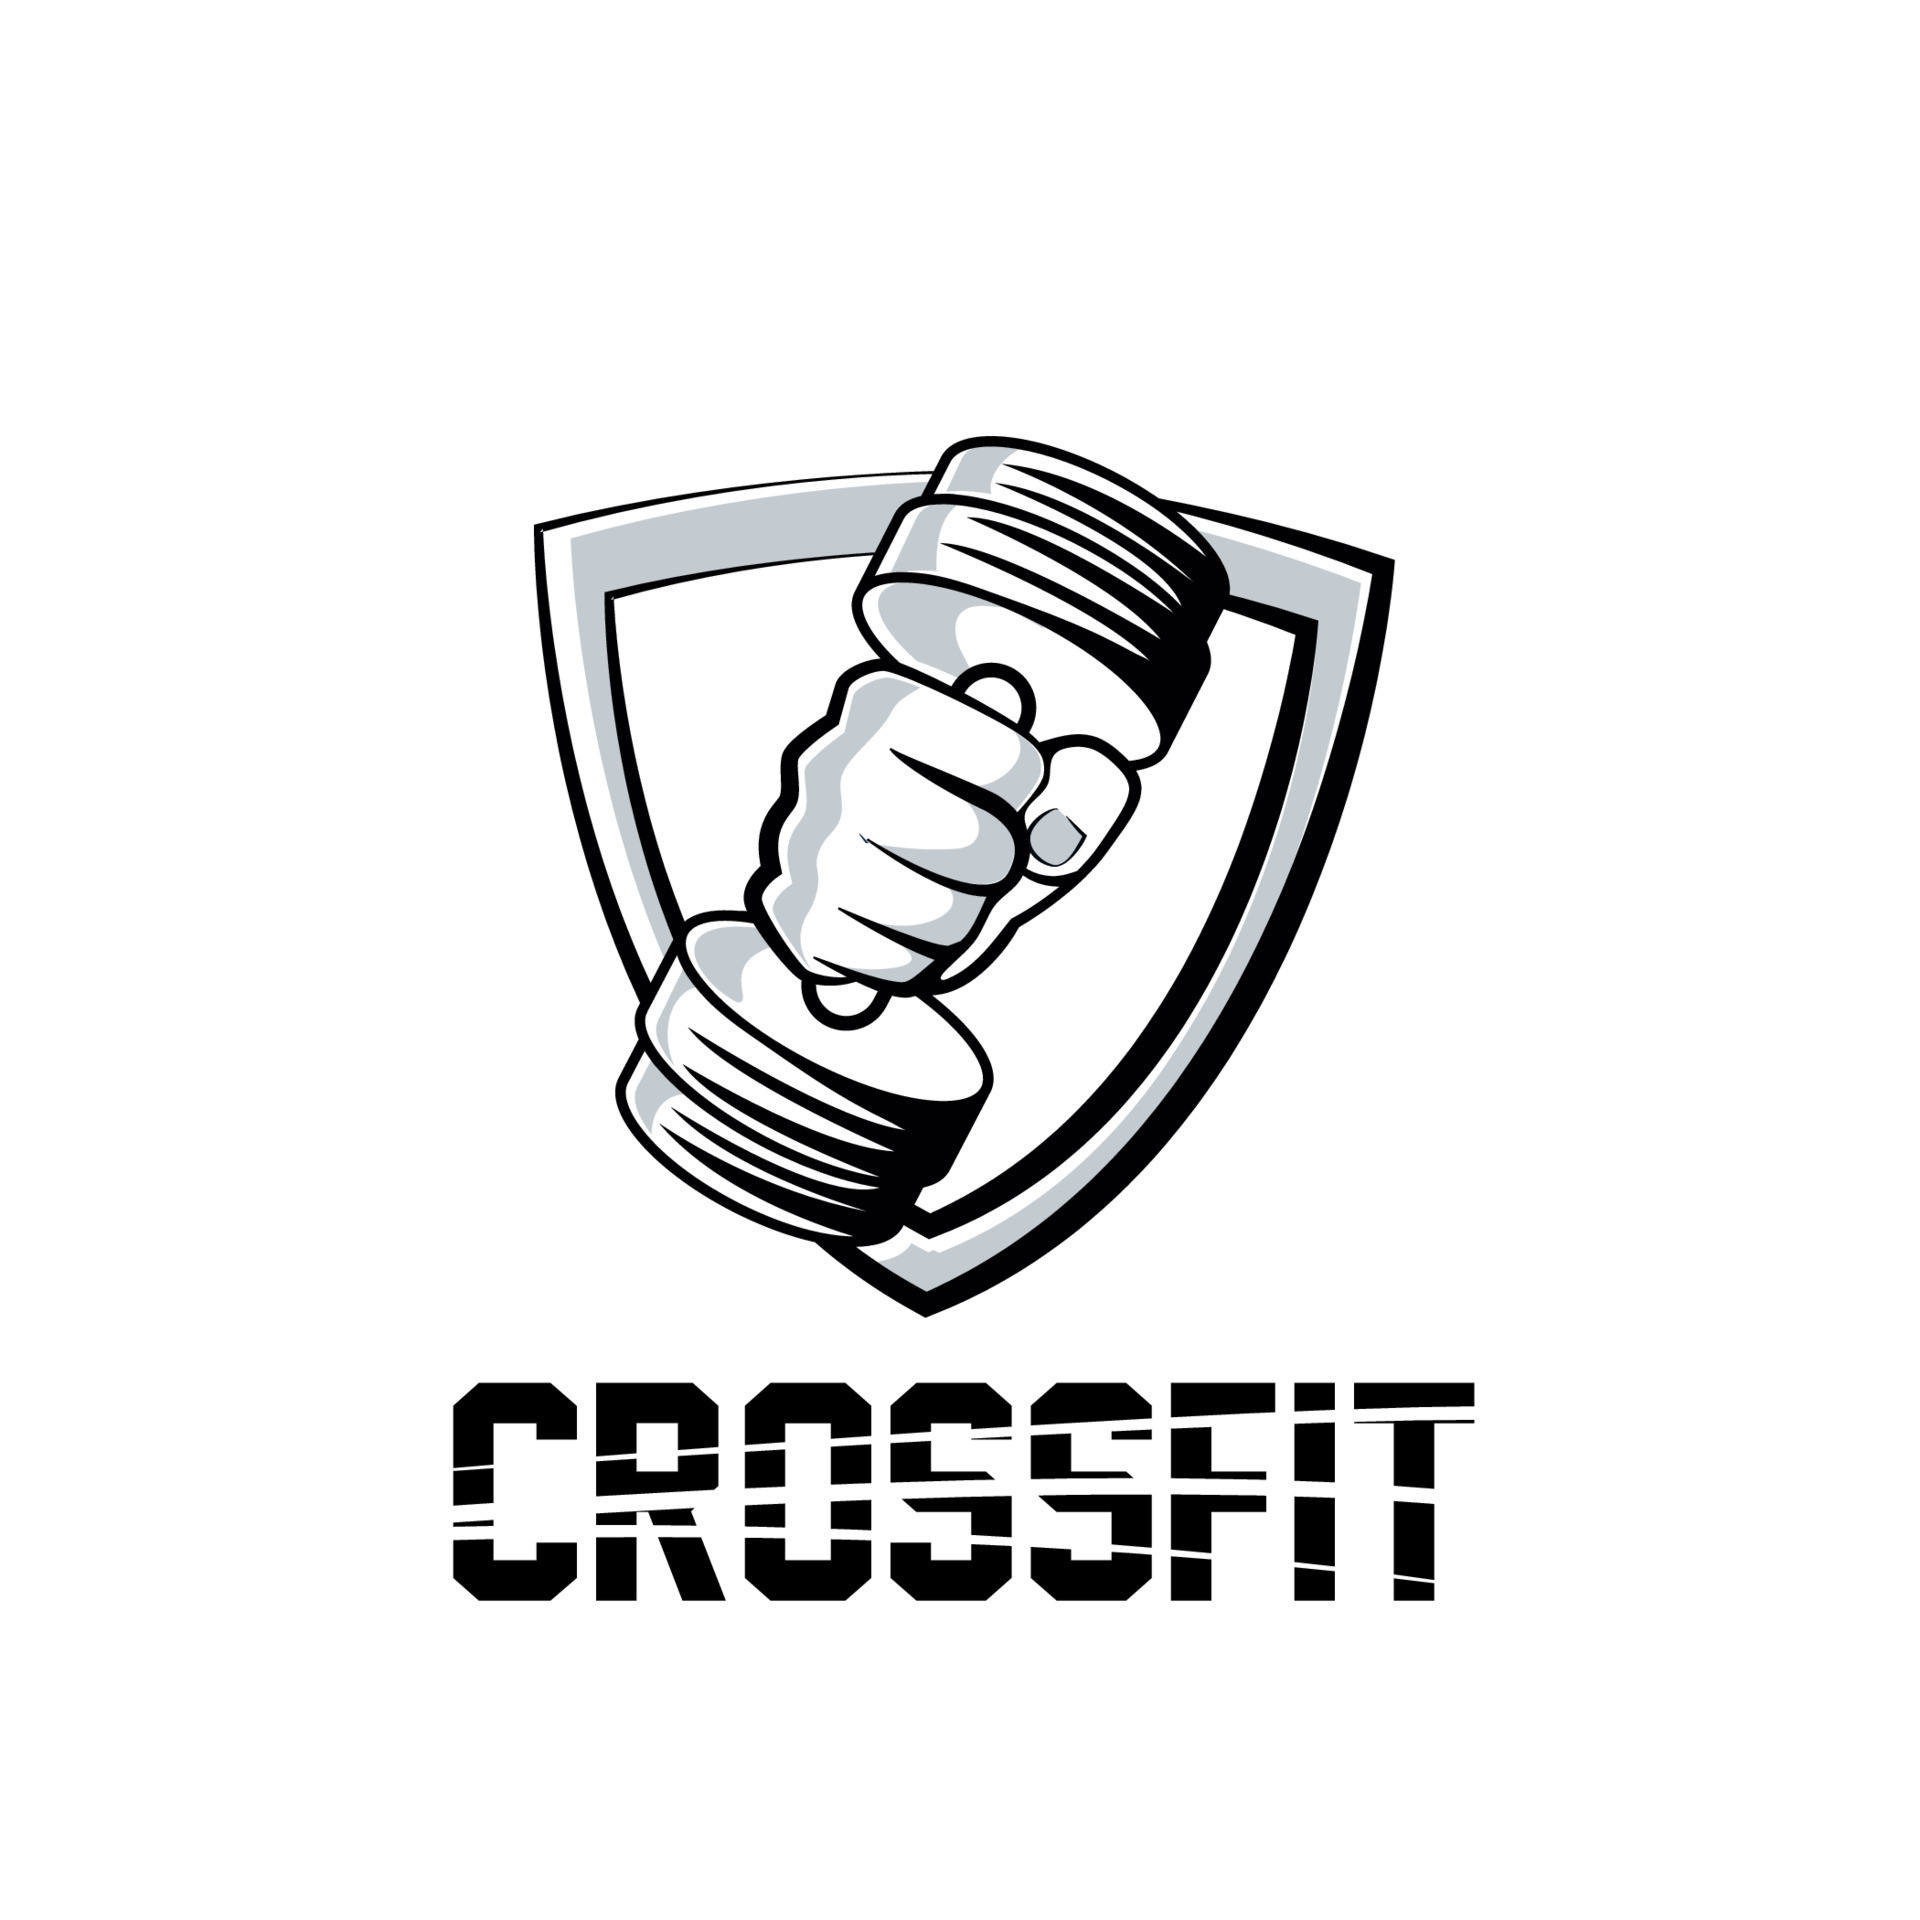 Crossfit logo design template 7798531 Vector Art at Vecteezy